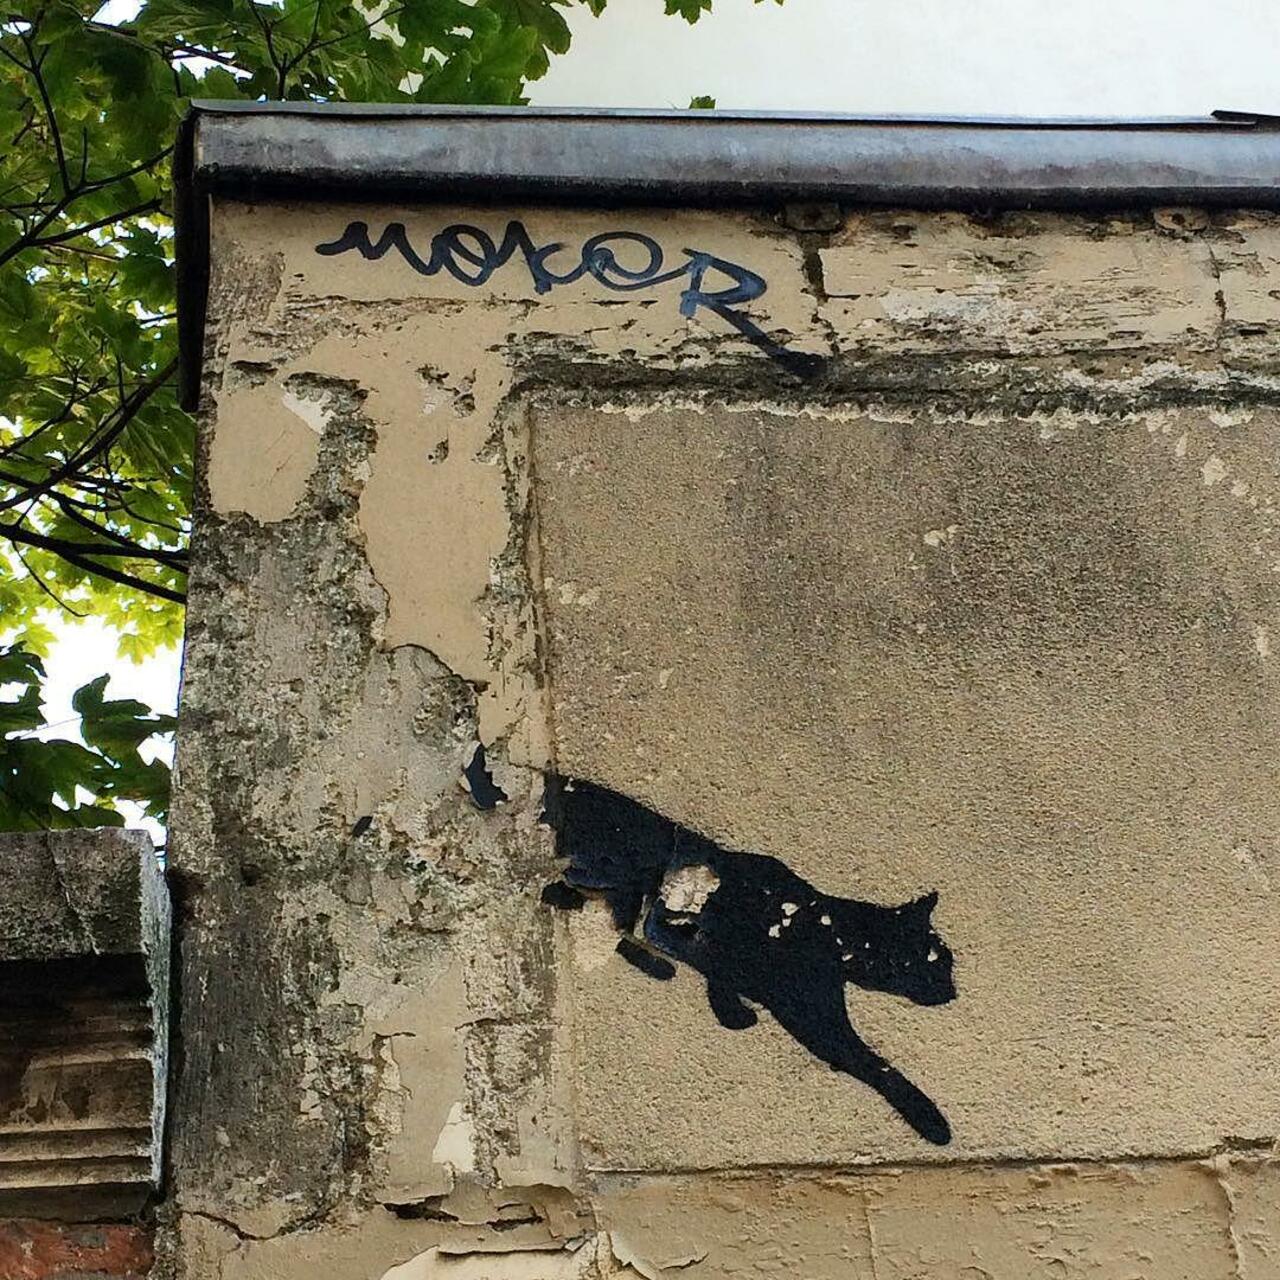 #Paris #graffiti photo by @benapix http://ift.tt/1VSTFQX #StreetArt http://t.co/RShrRY8rTj